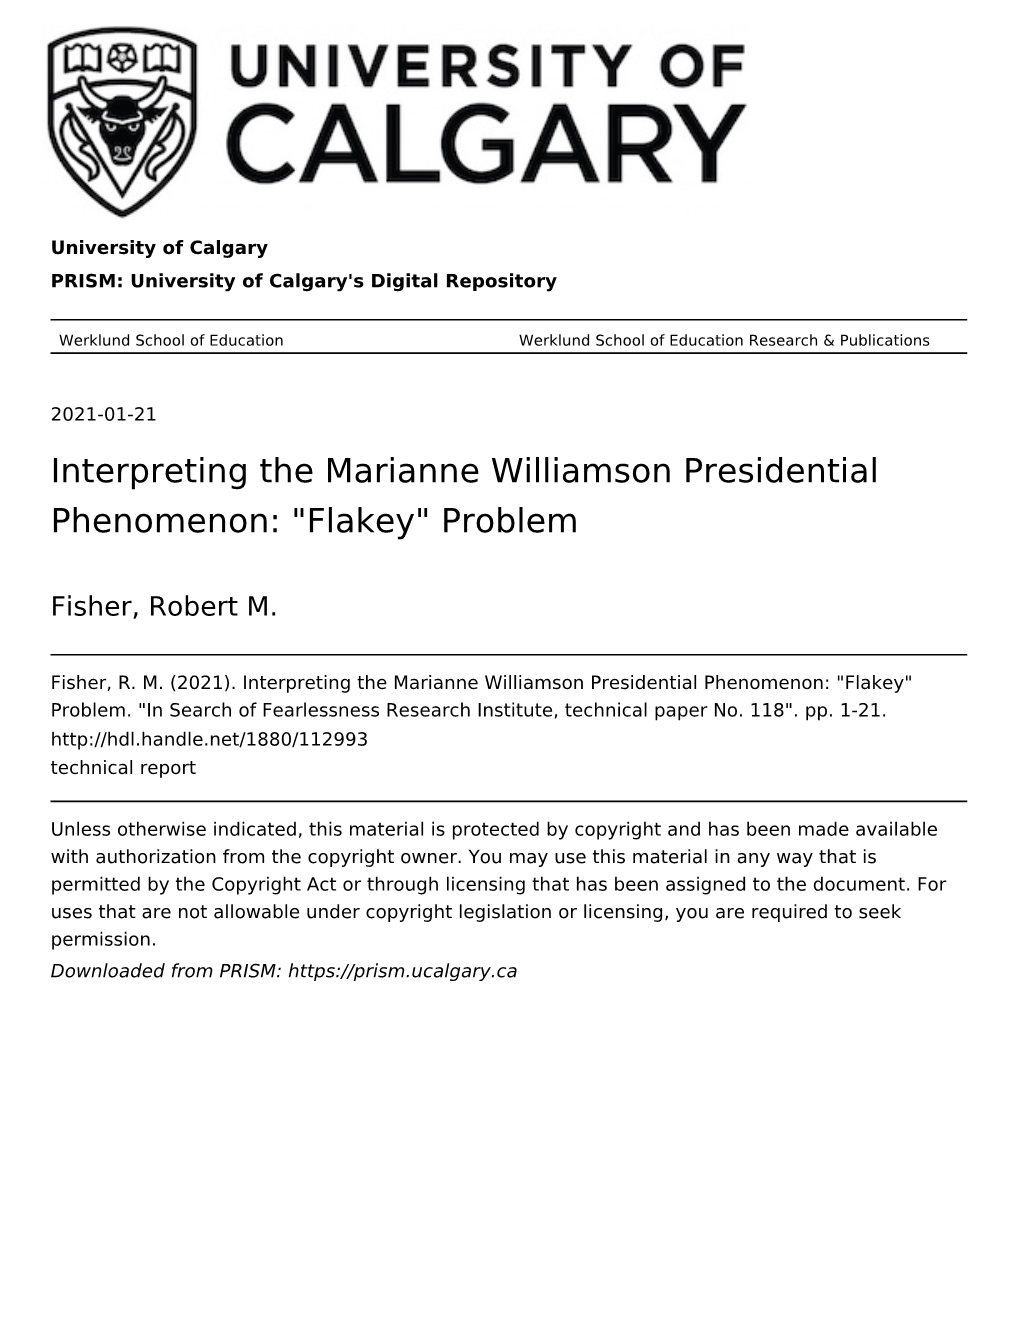 Interpreting the Marianne Williamson Presidential Phenomenon: "Flakey" Problem